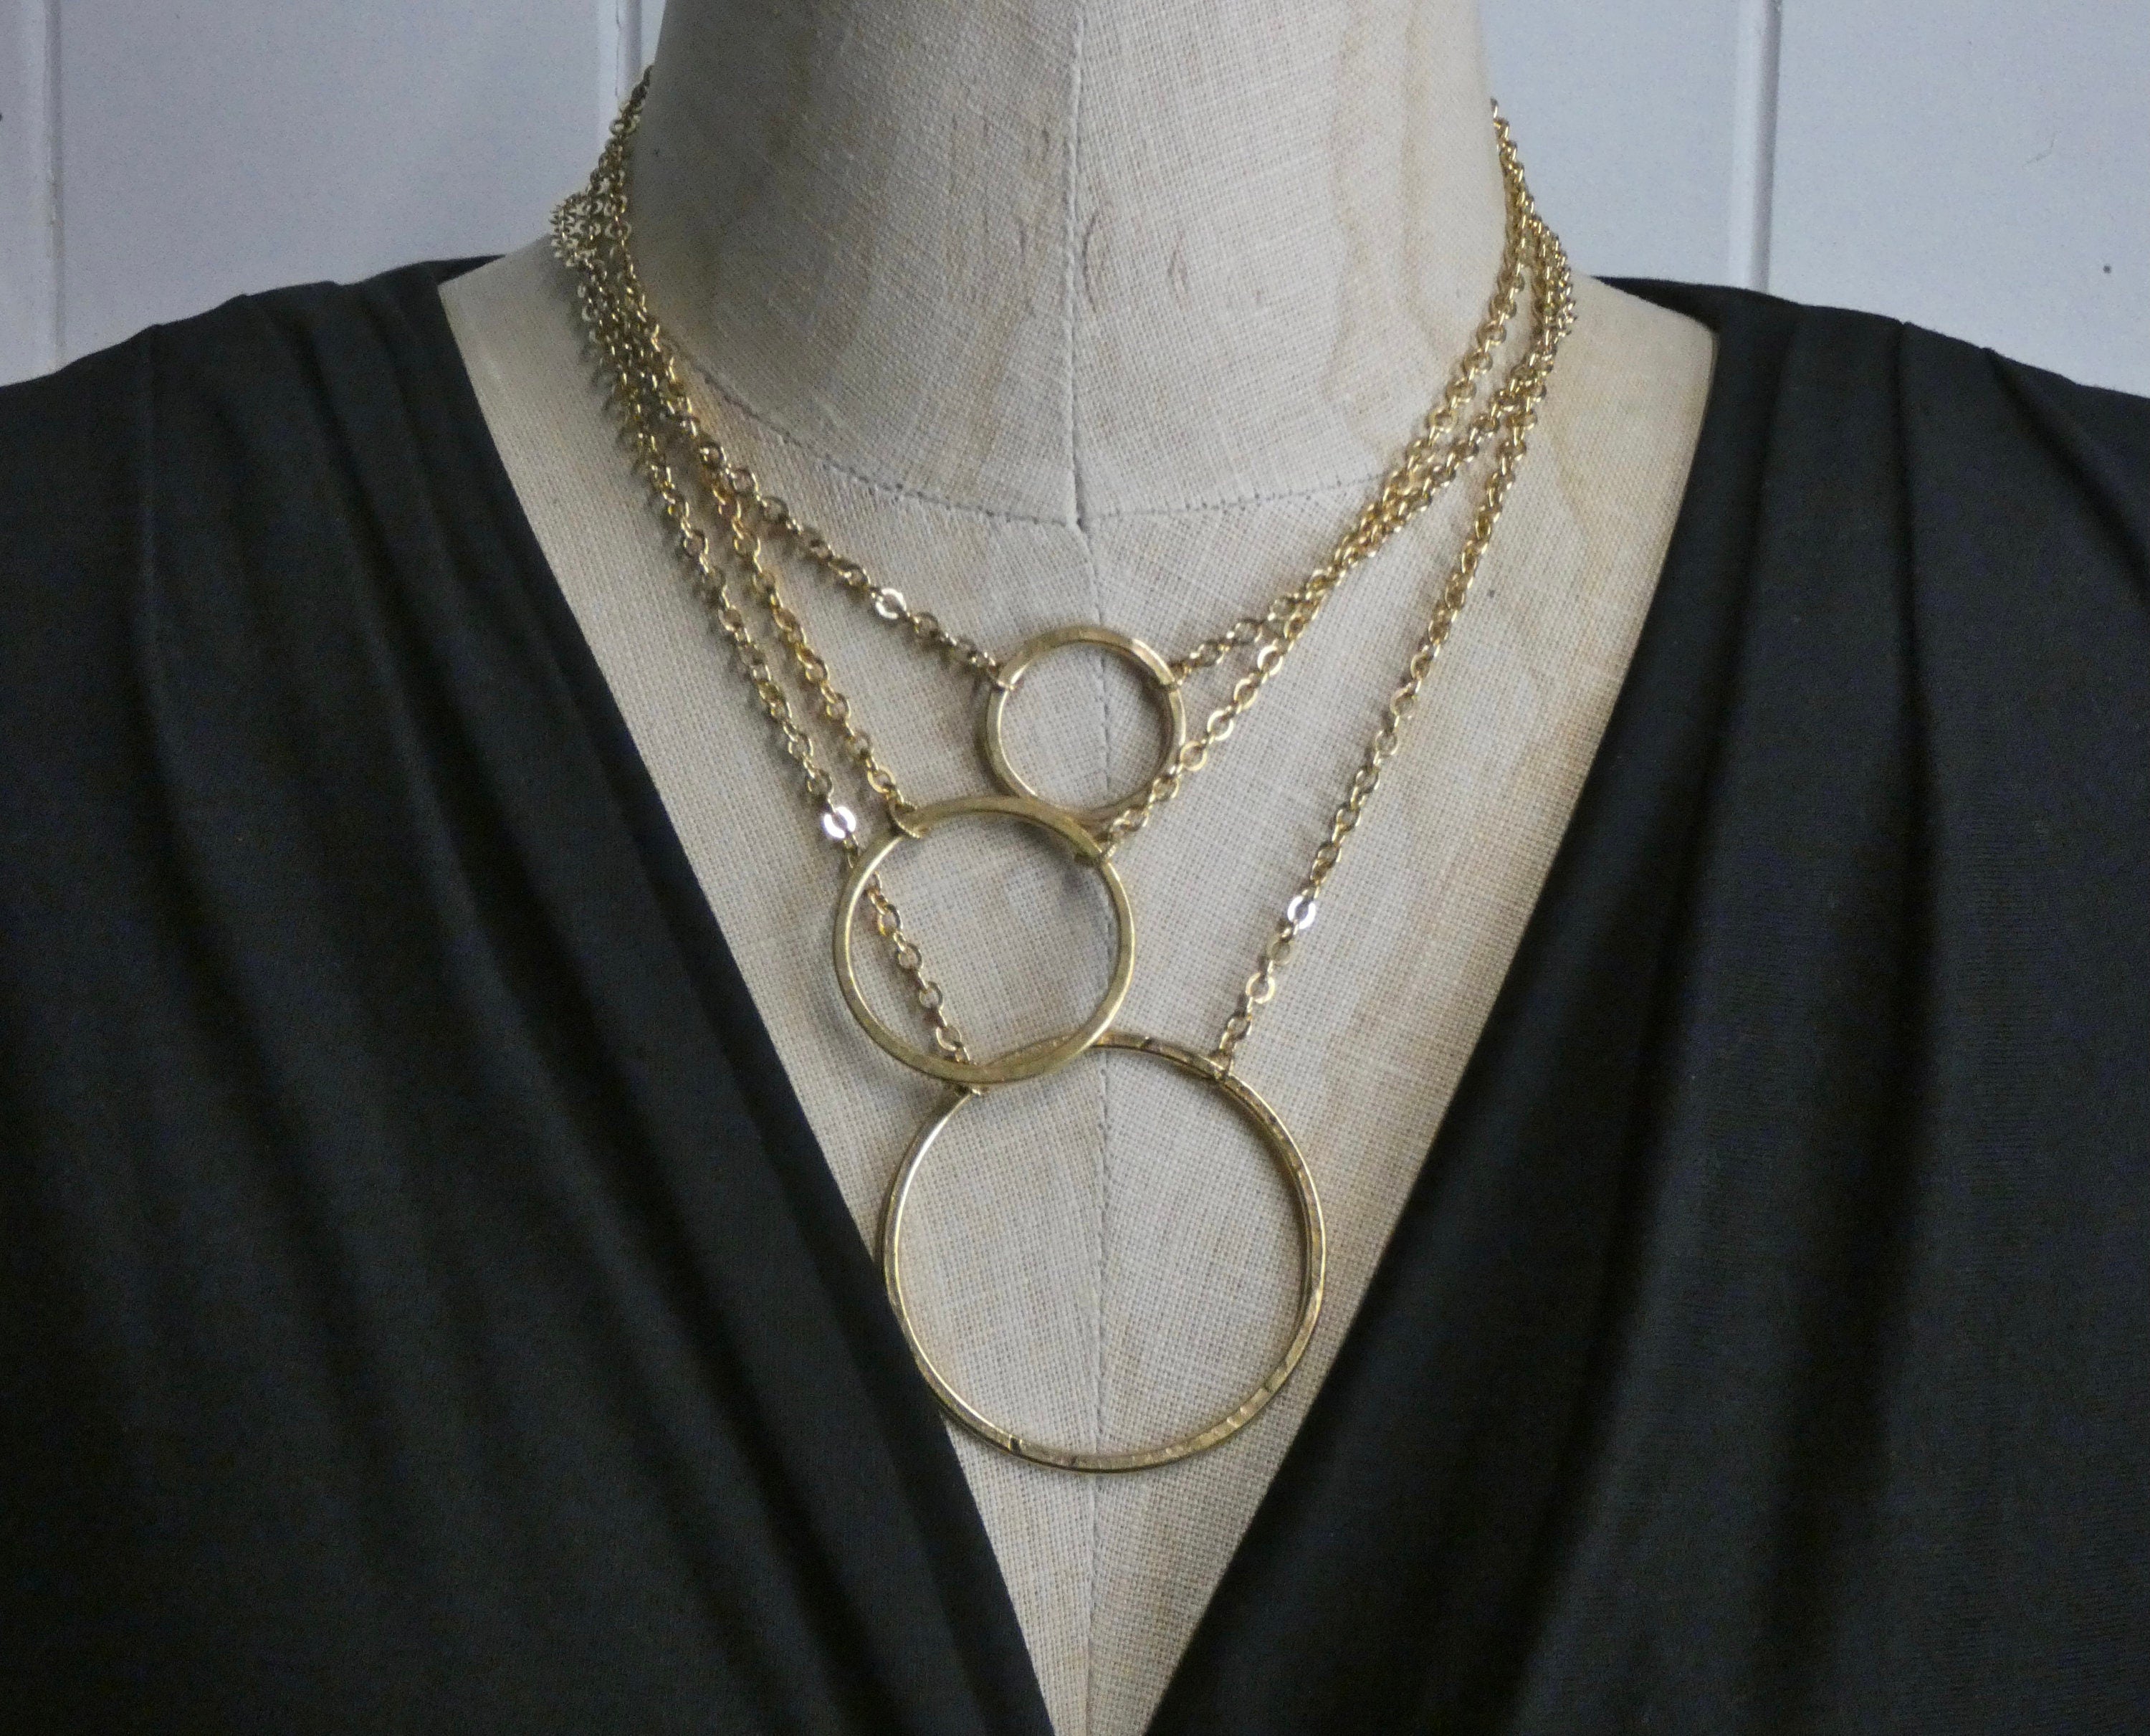 1 Carat Diamond Large Circle Pendant Necklace, 14k White Gold Chain, 18  Inches | eBay